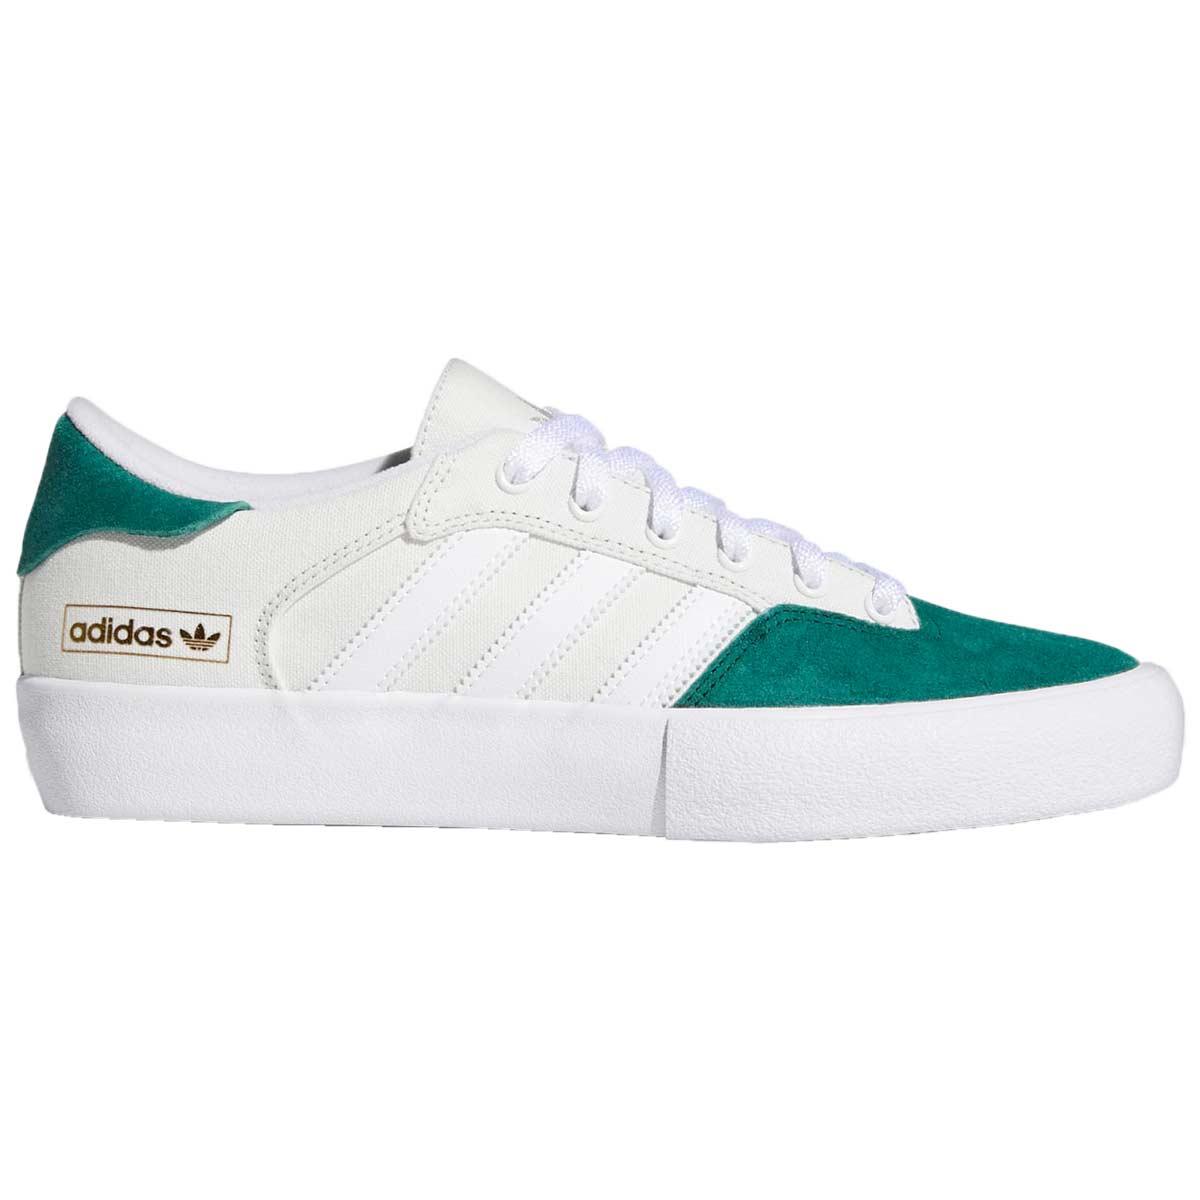 bon Afgrond Boodschapper Adidas Matchbreak Super Shoes, Crystal White/Cloud White/Collegiate Green